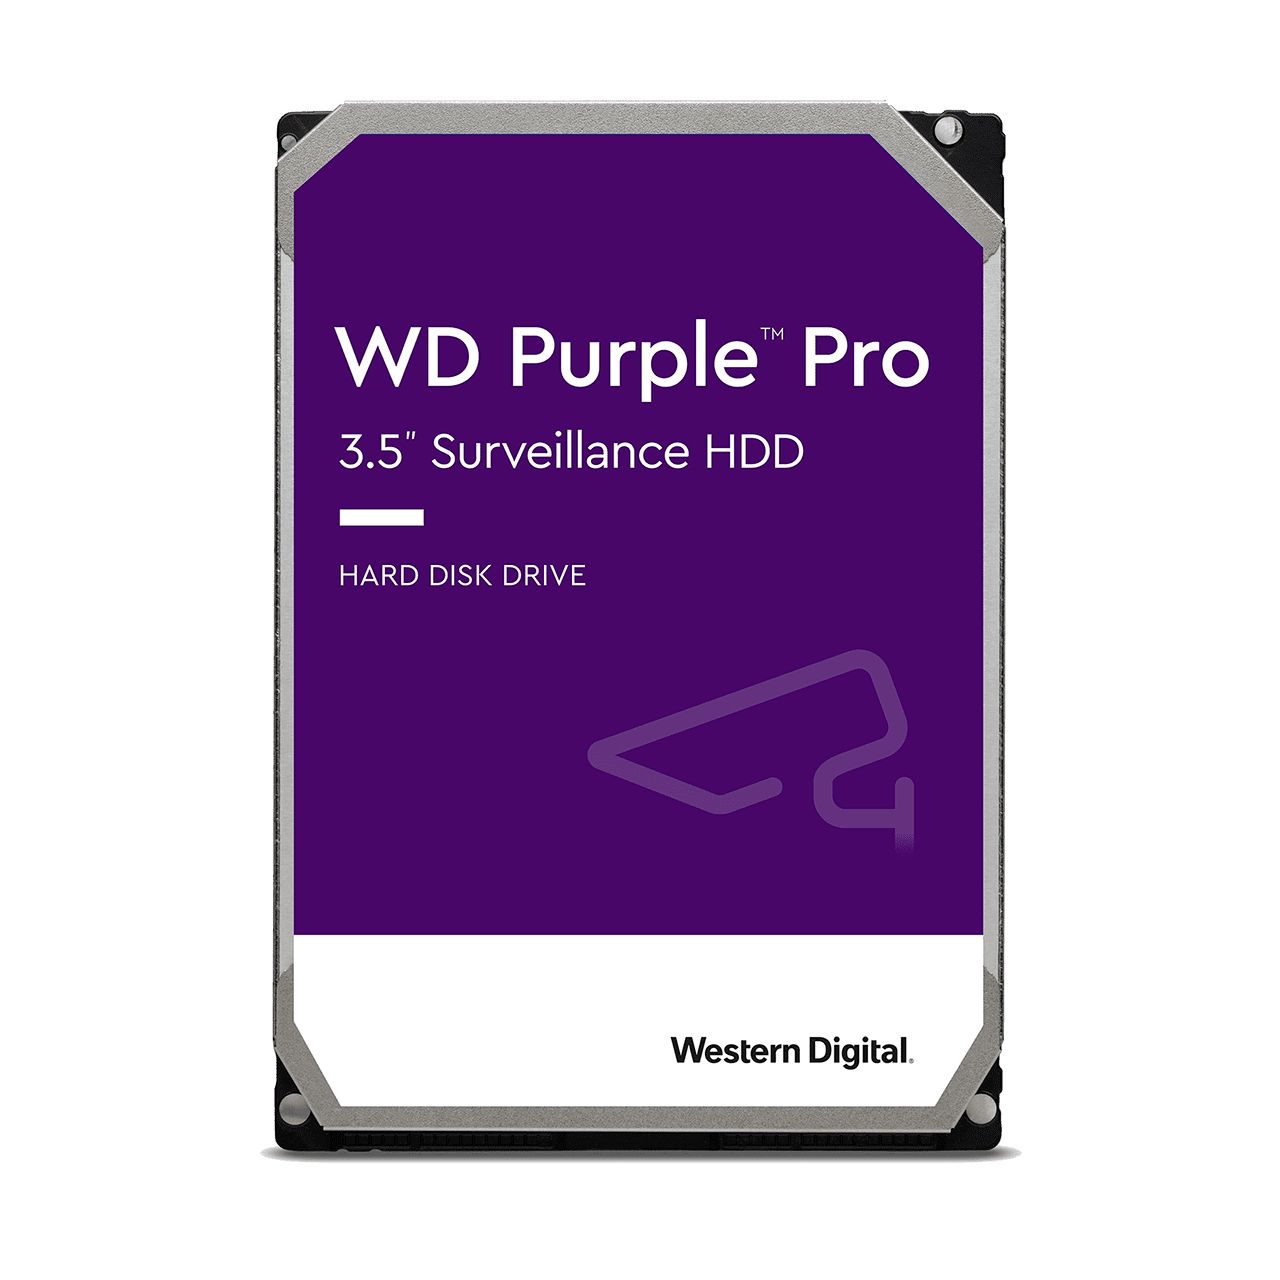 WD101PURP - Disco WD Purple Pro 3.5